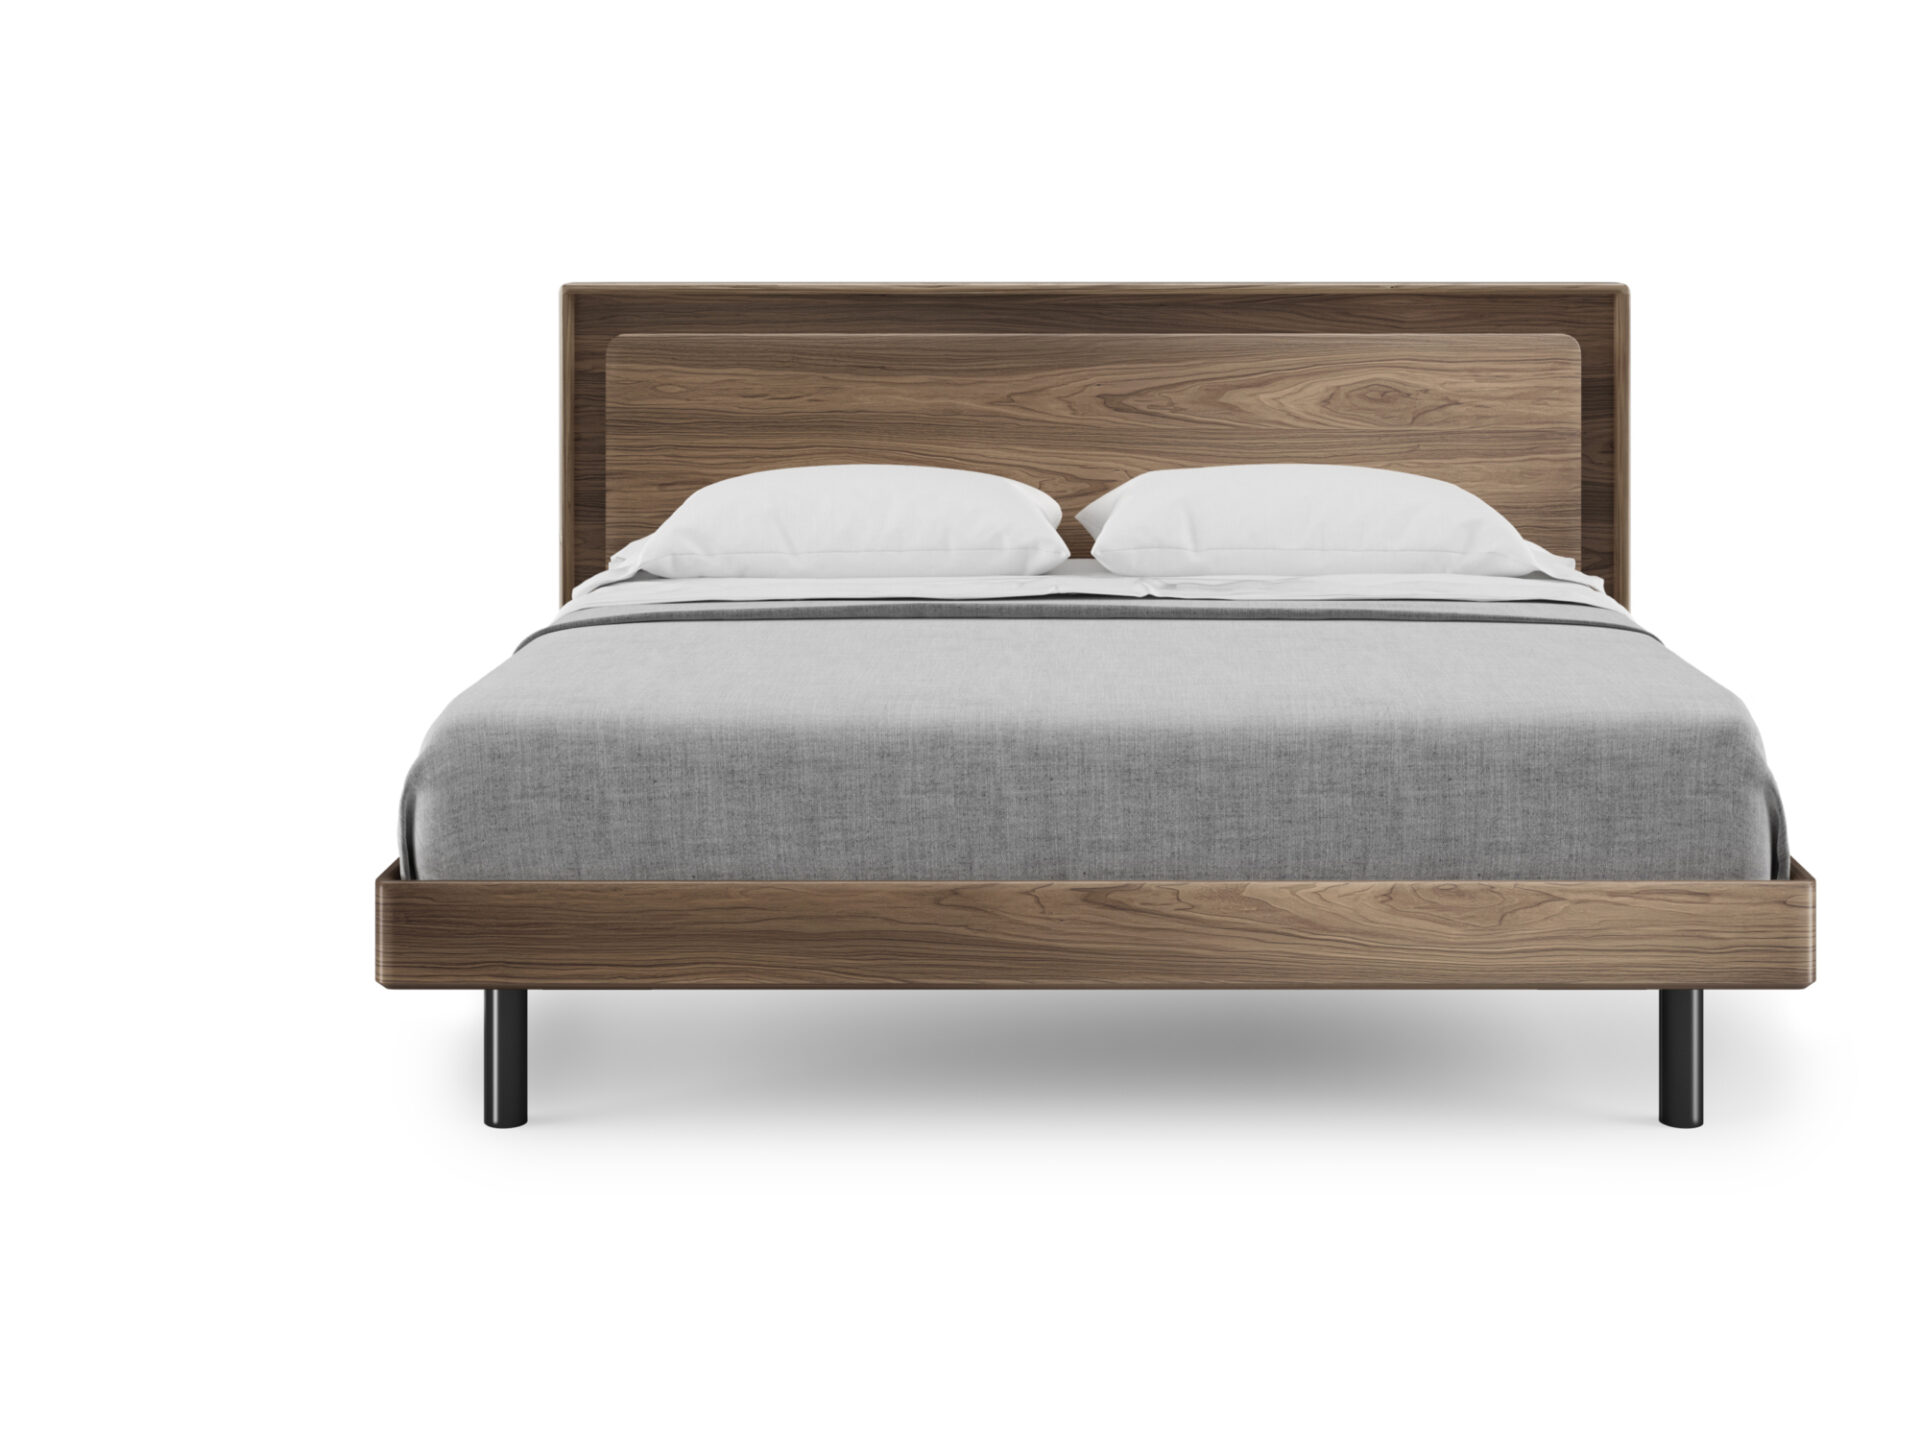 up-linq-bed-king-9119-BDI-walnut-modern-platform-bed-2-3200